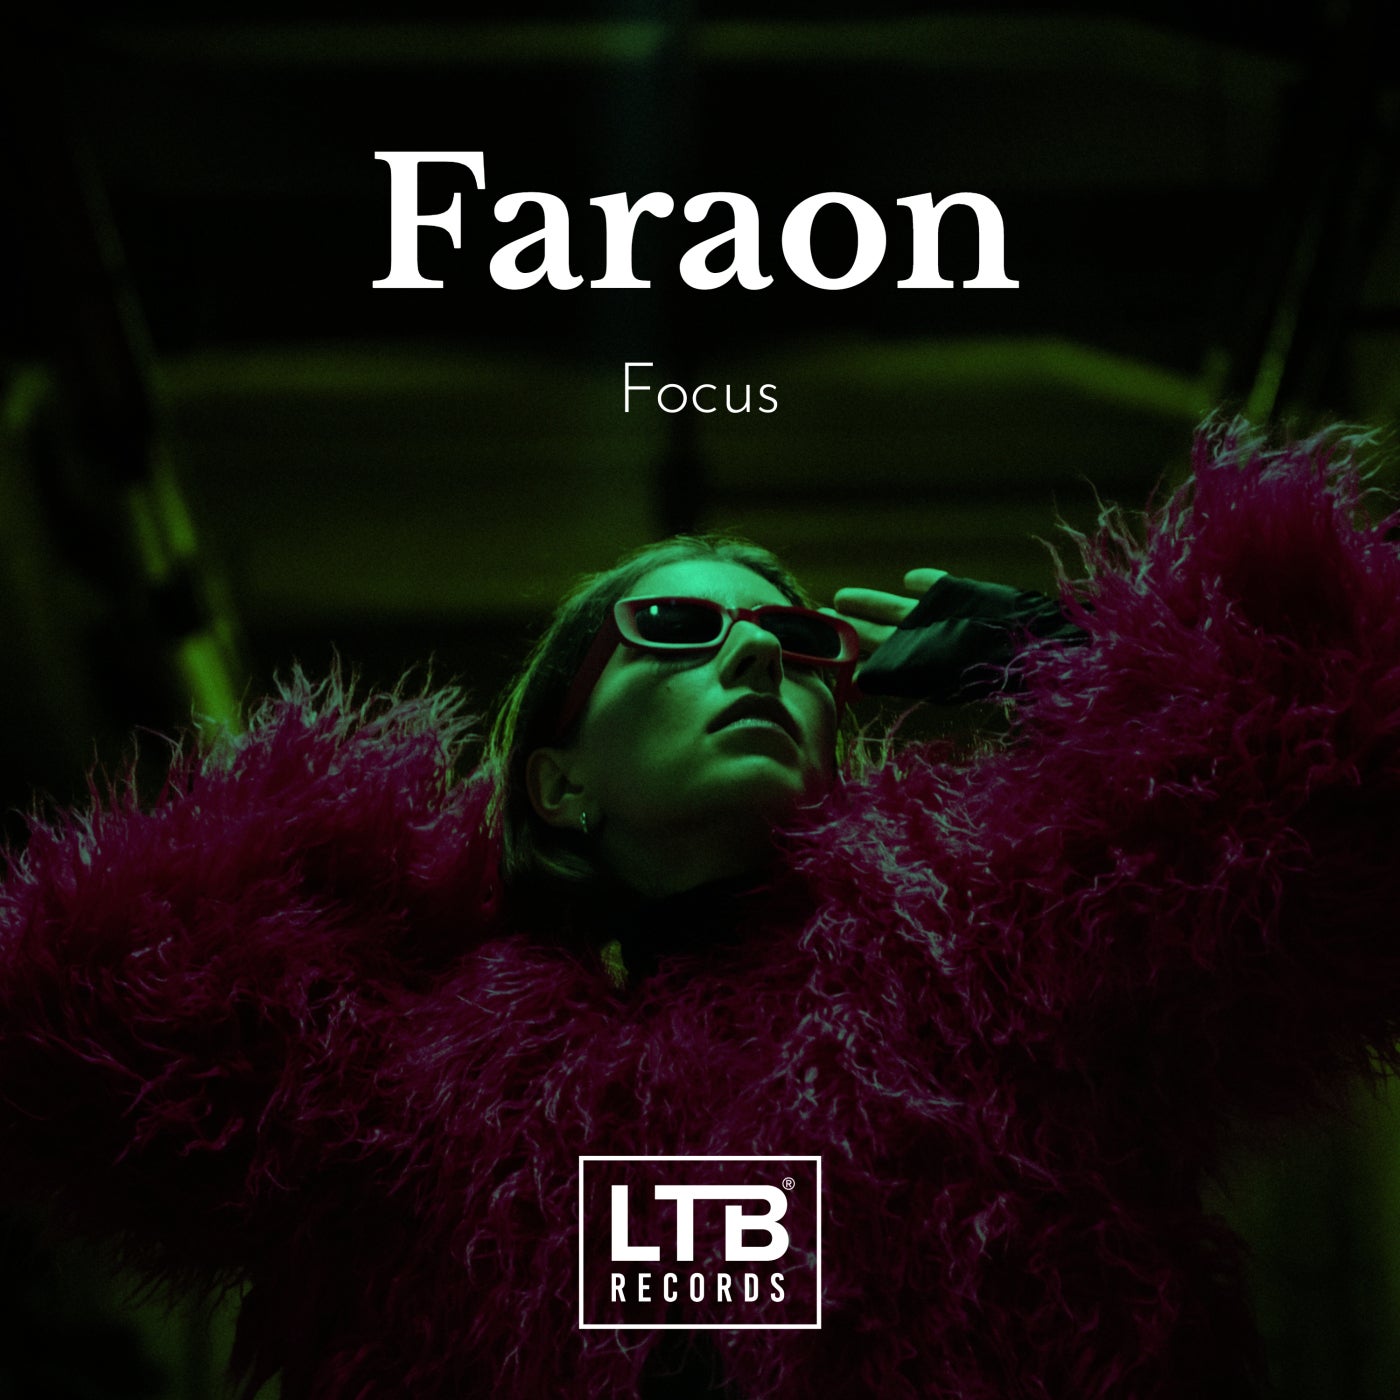 Faraon - Focus [LTB Records]